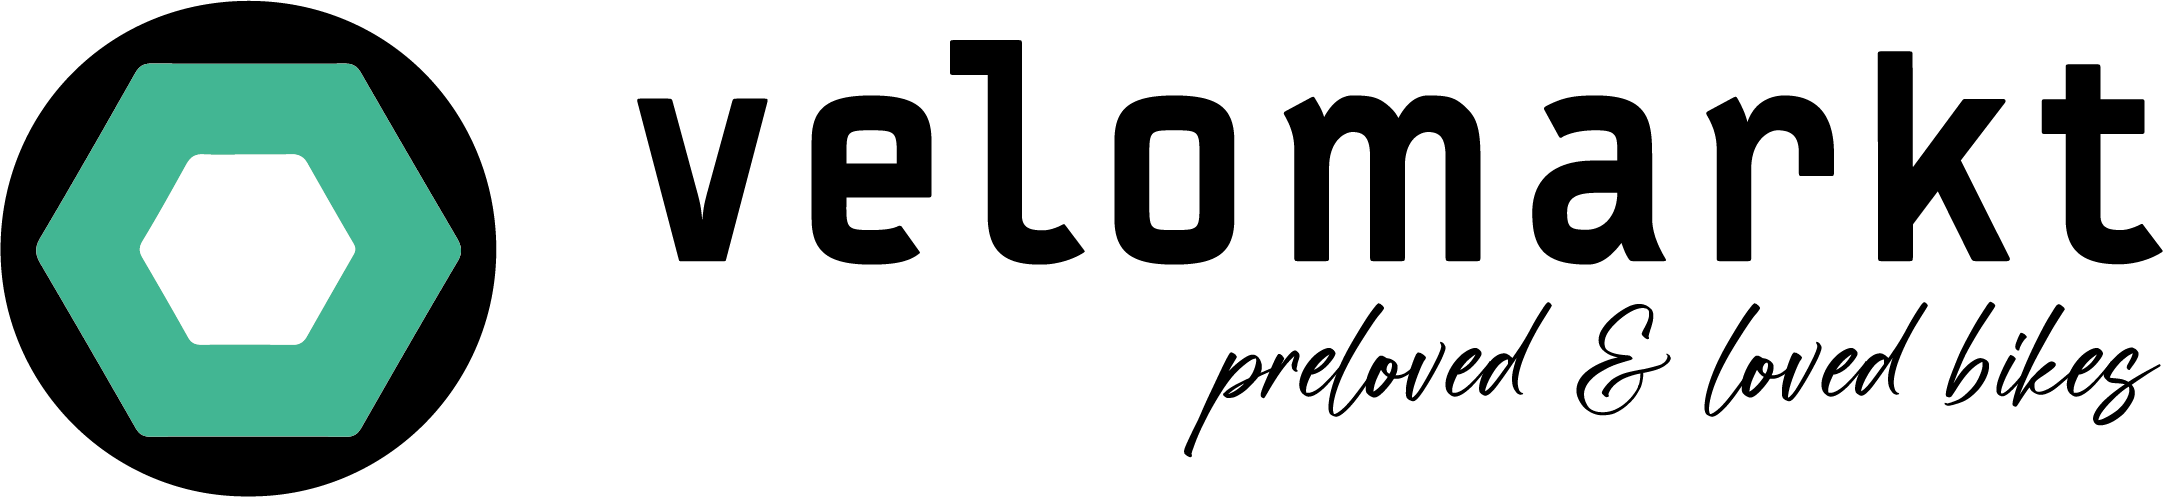 Logo velomarkt.ch mit Claim